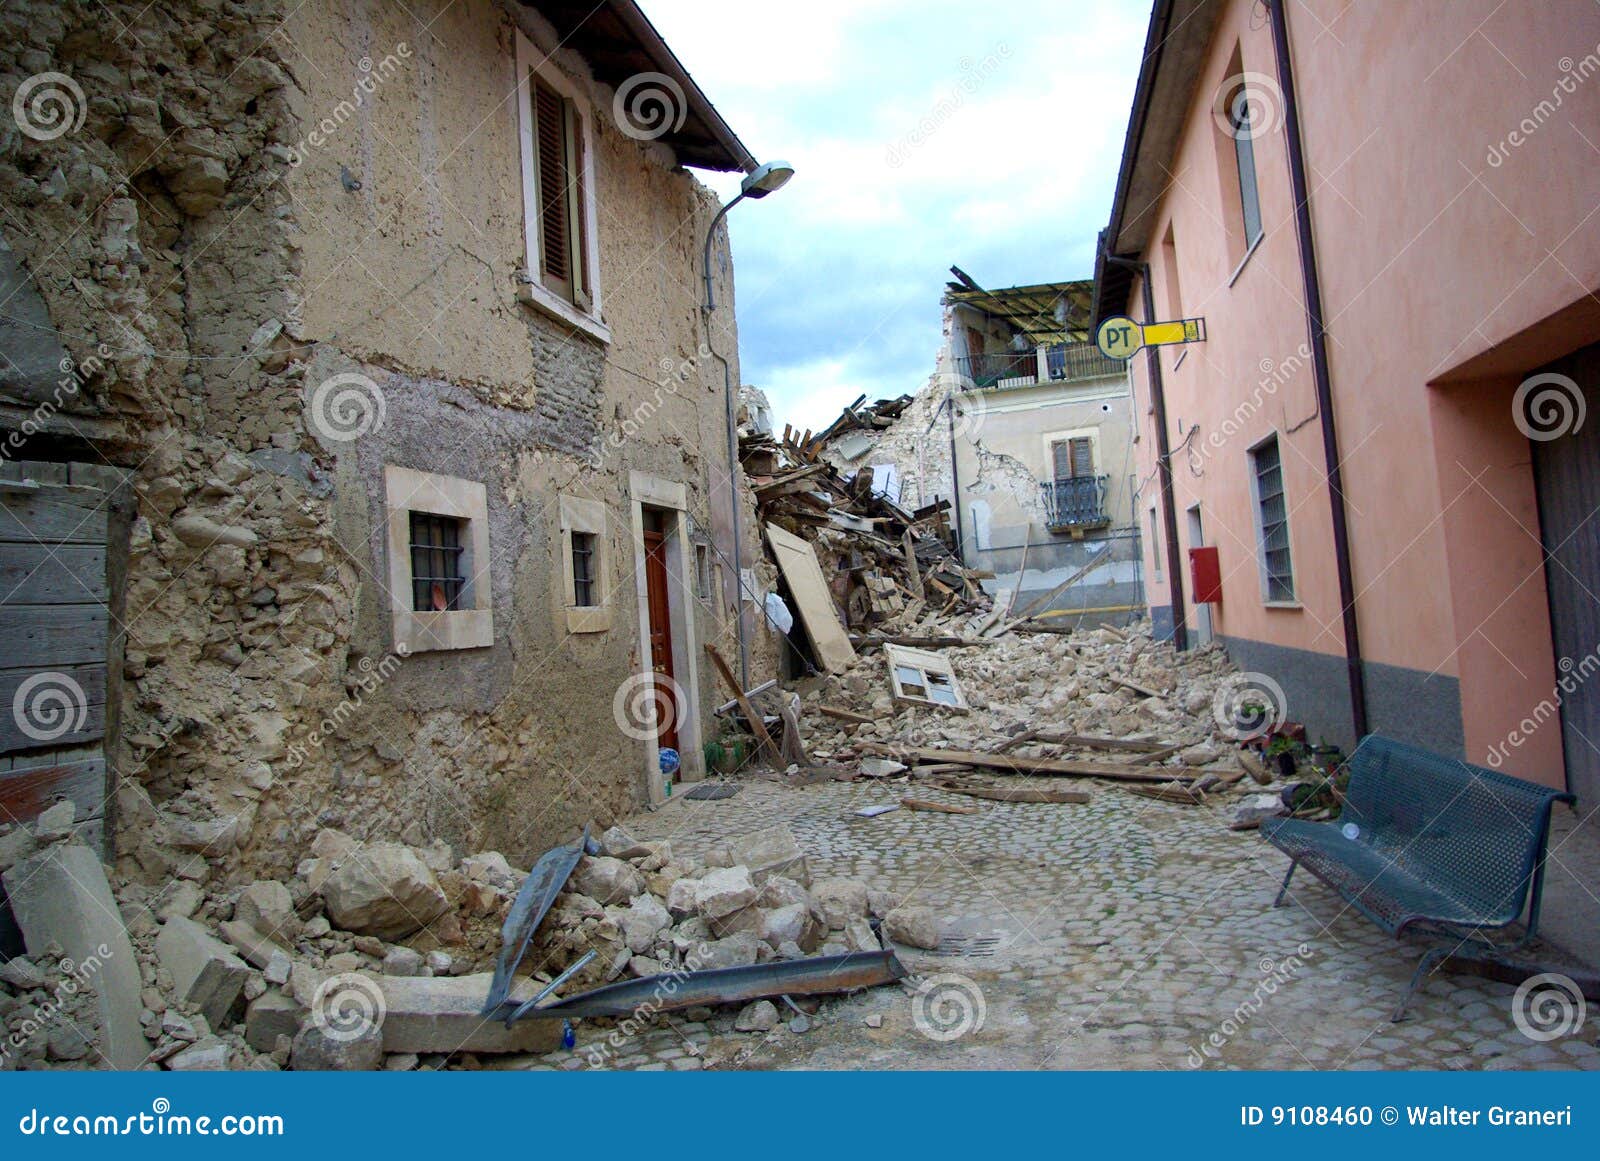 italy earthquake